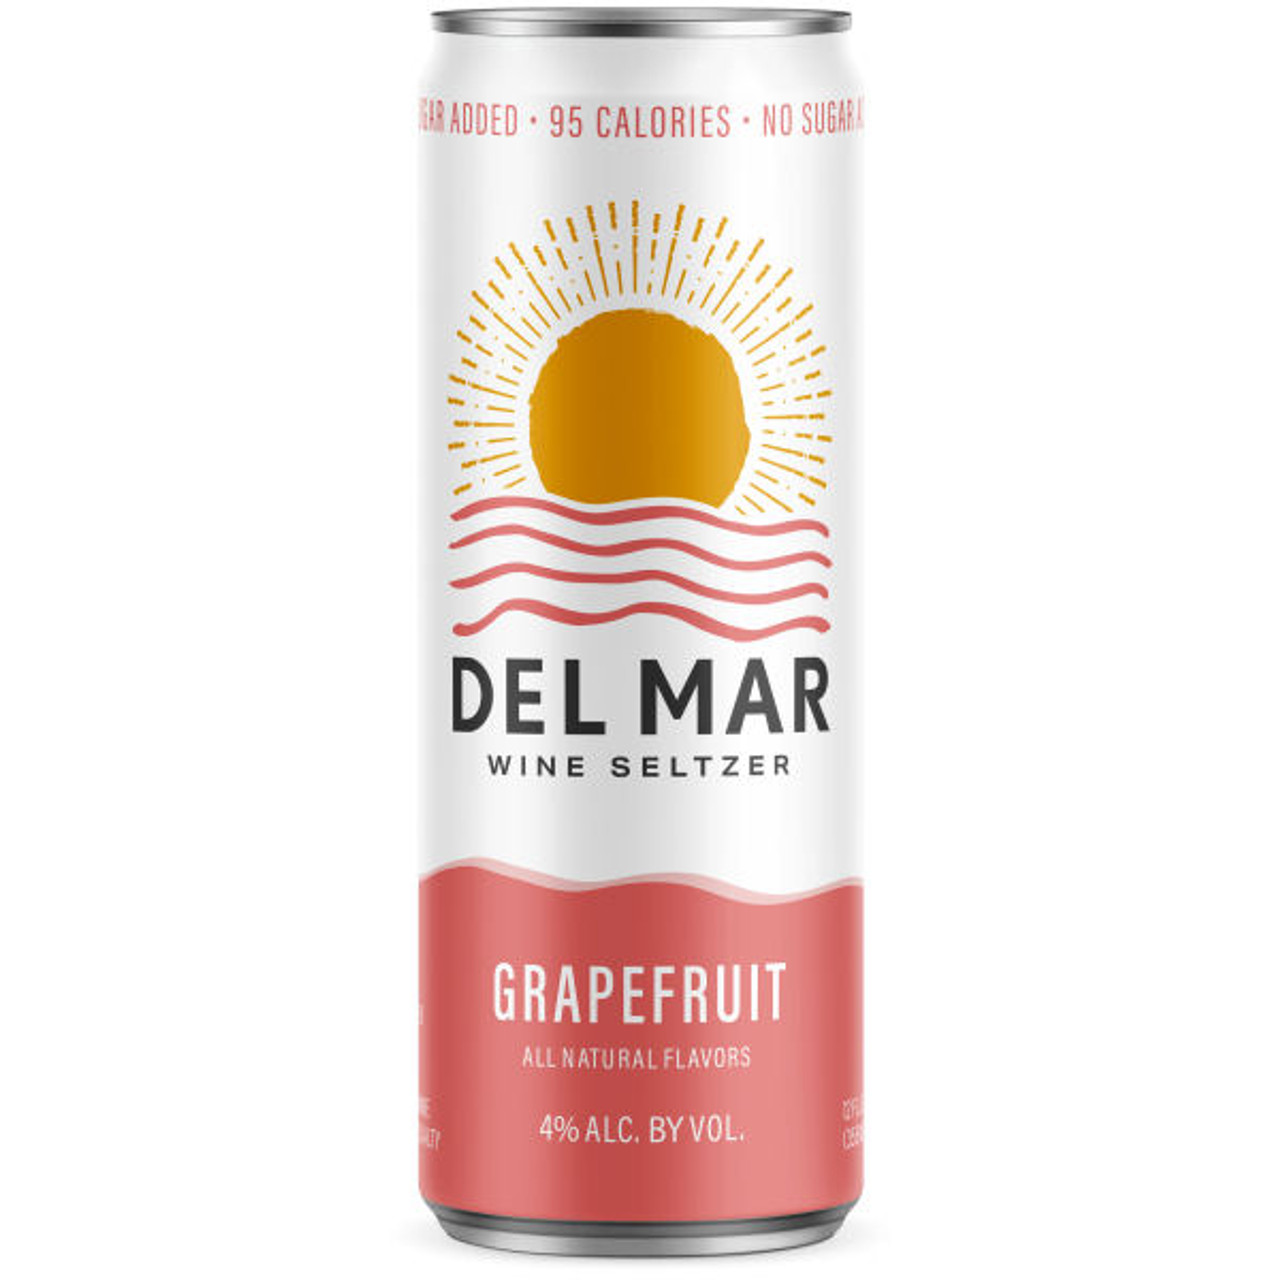 Del Mar Grapefruit Wine Seltzer 12oz 4 Pack Cans